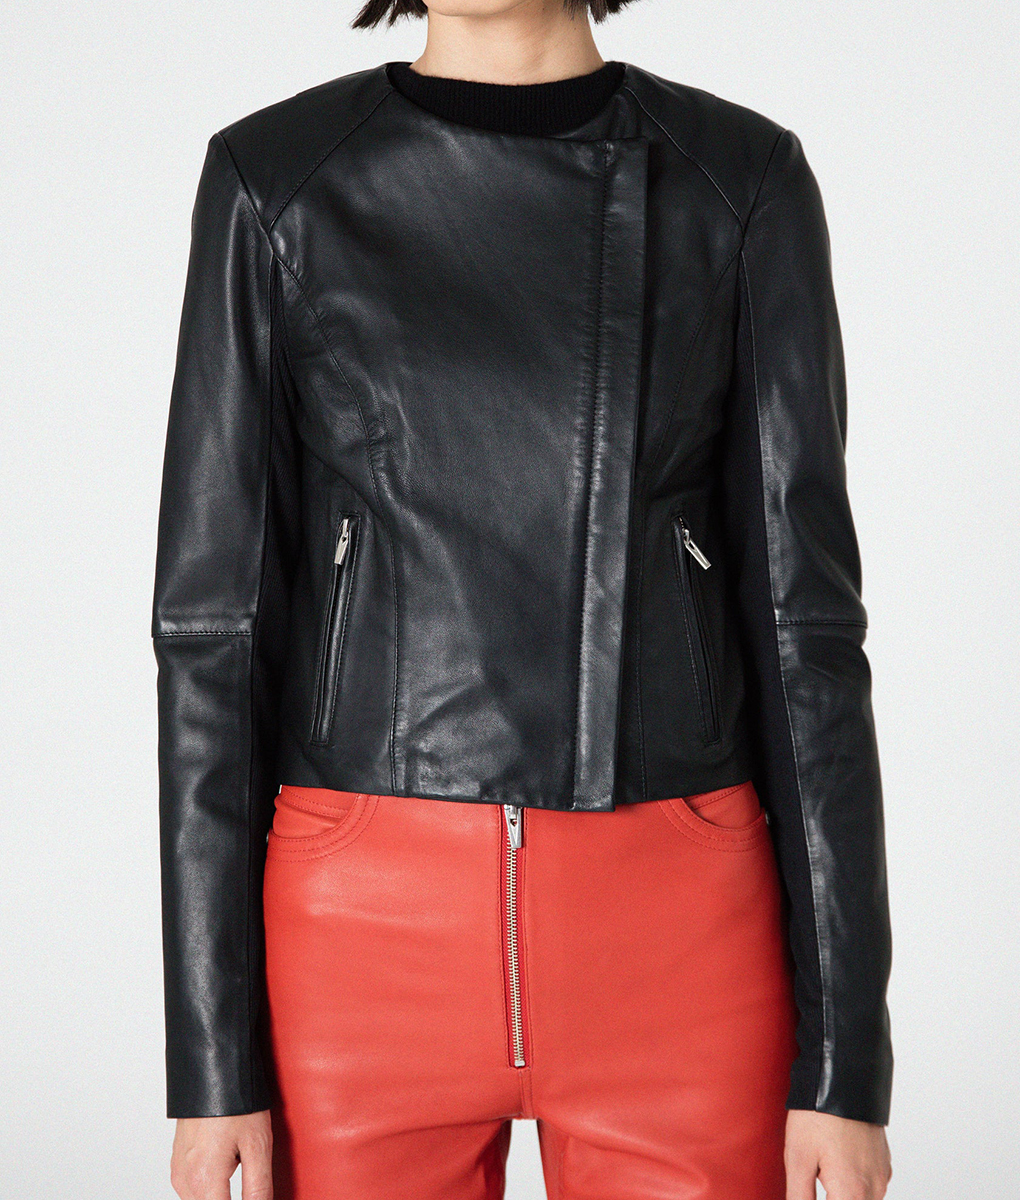 Pamela Adlon Better Things Black Leather Jacket (5)